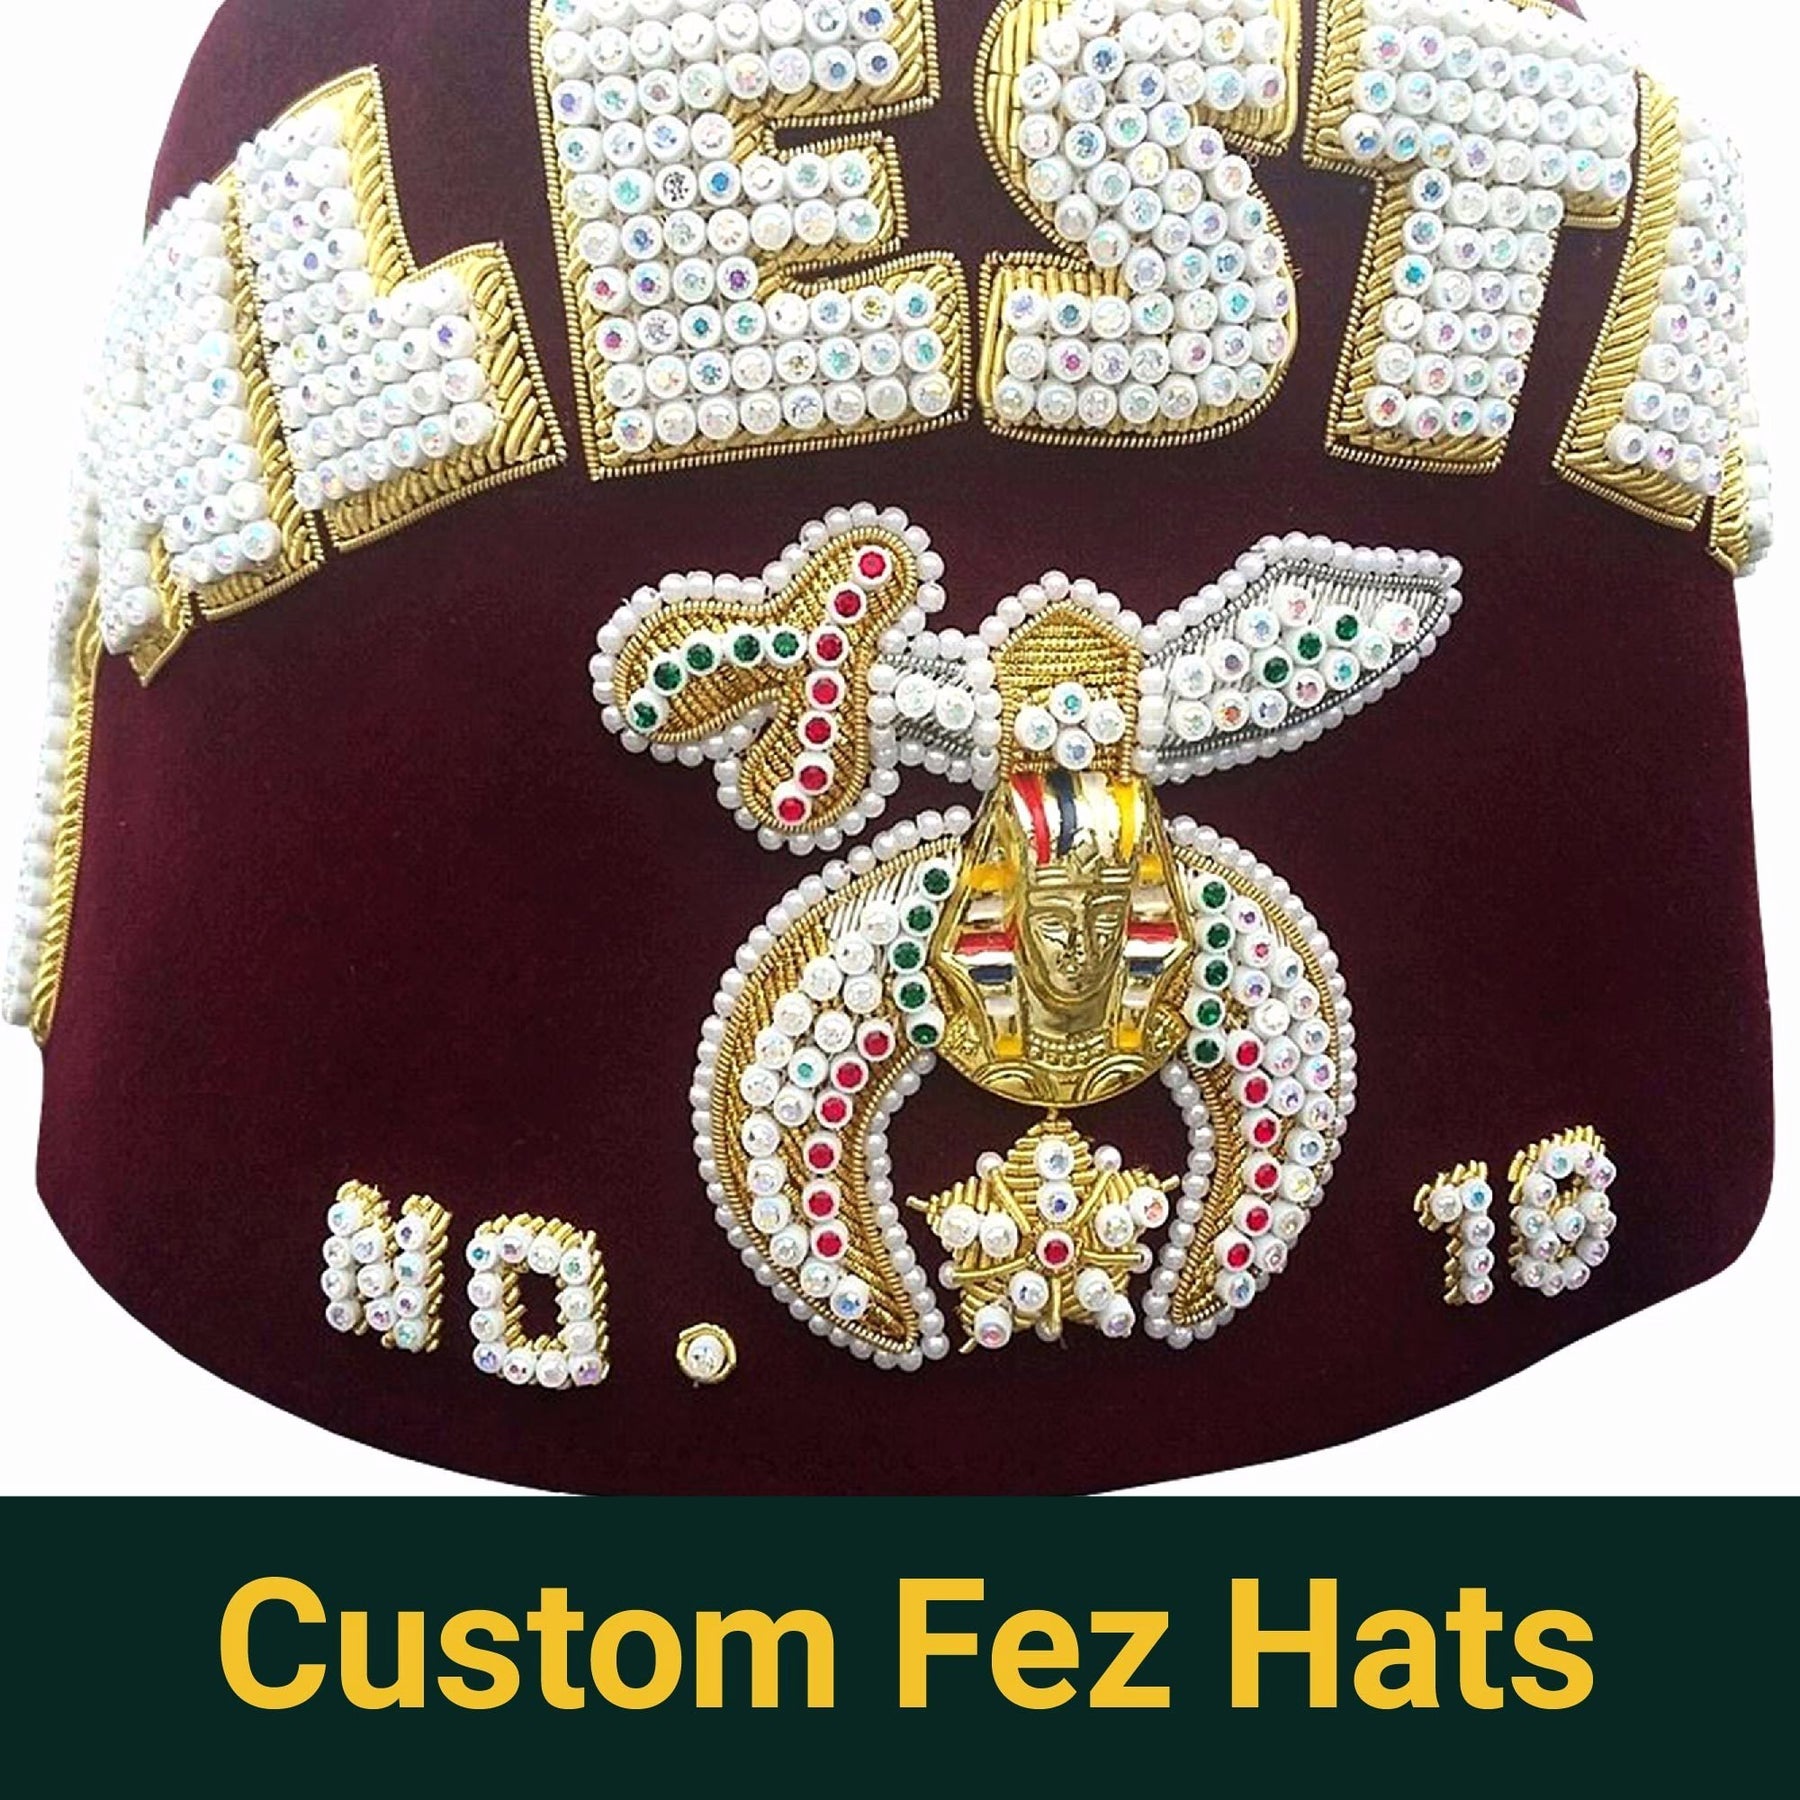 Shriners Fez Hat - Hand Embroidery | Bricks Masons